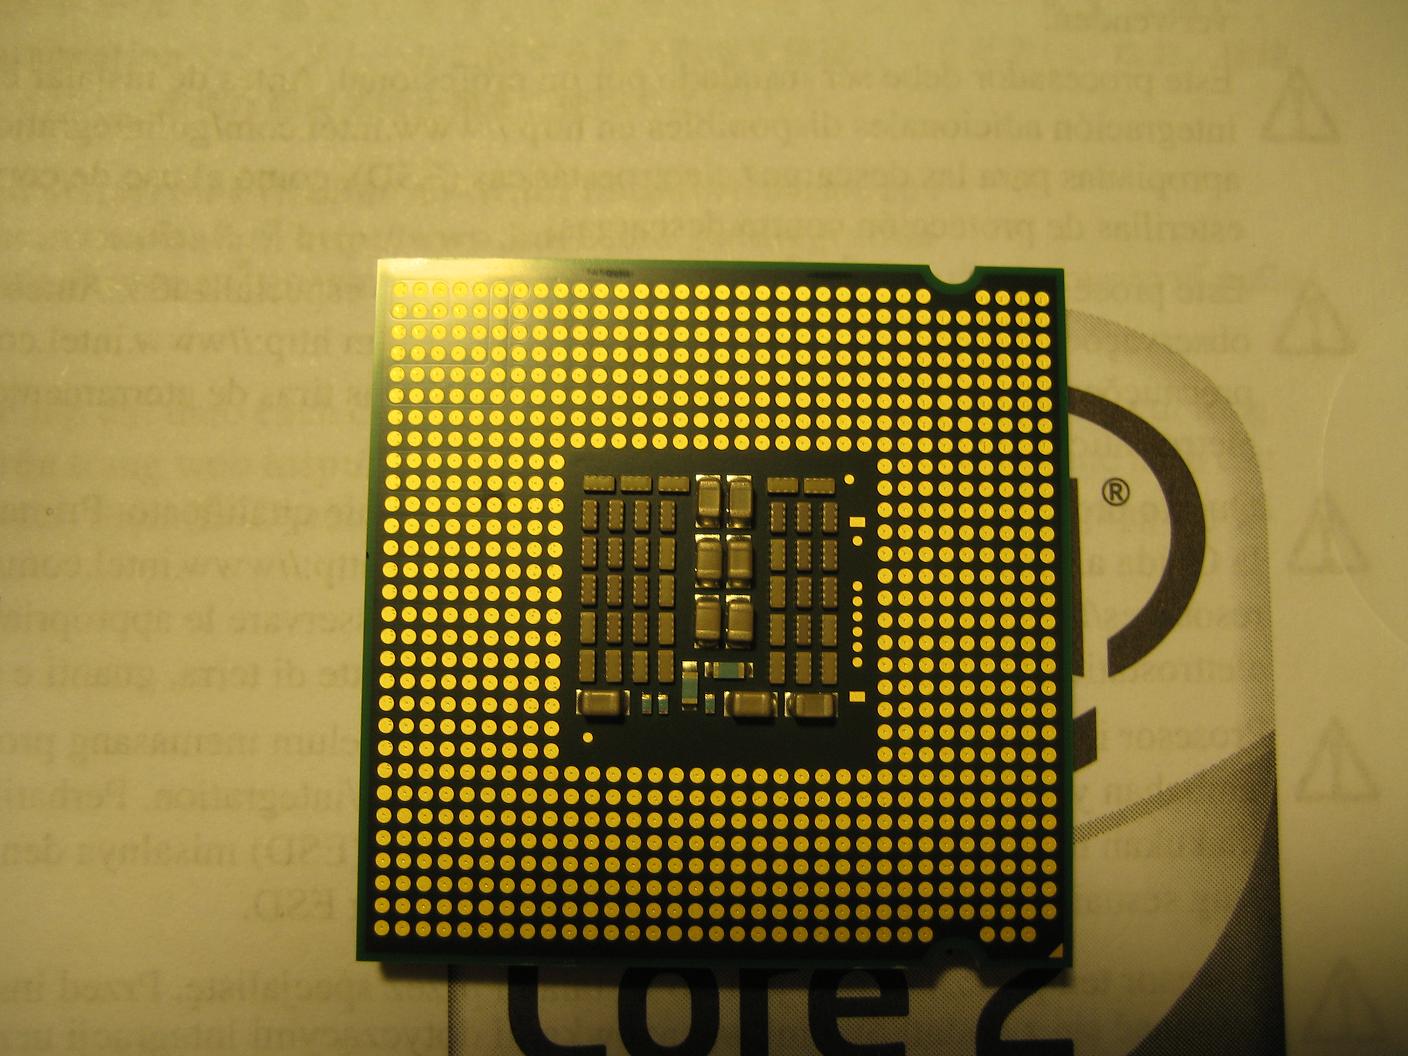 Intel Q9450